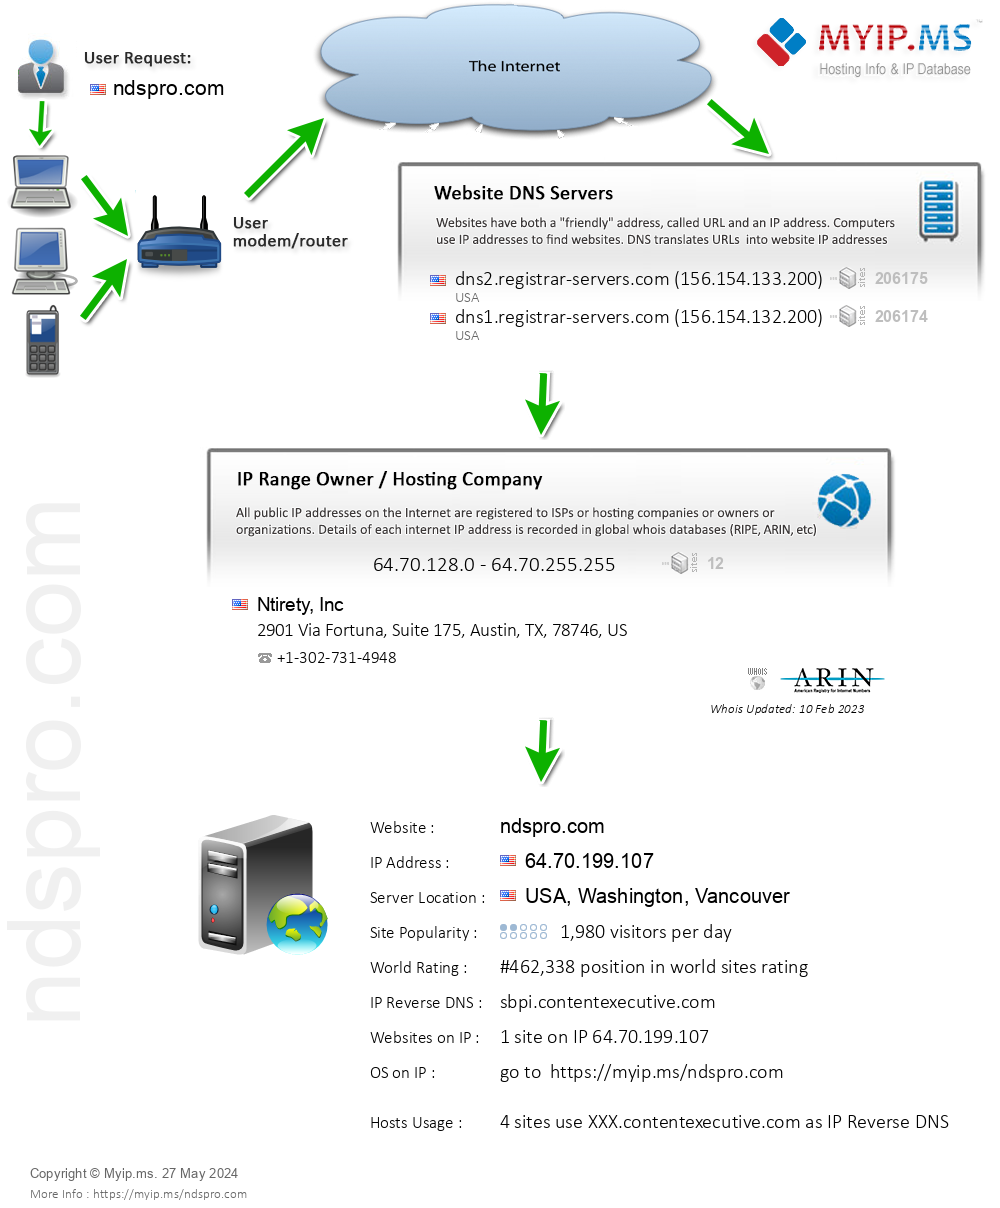 Ndspro.com - Website Hosting Visual IP Diagram